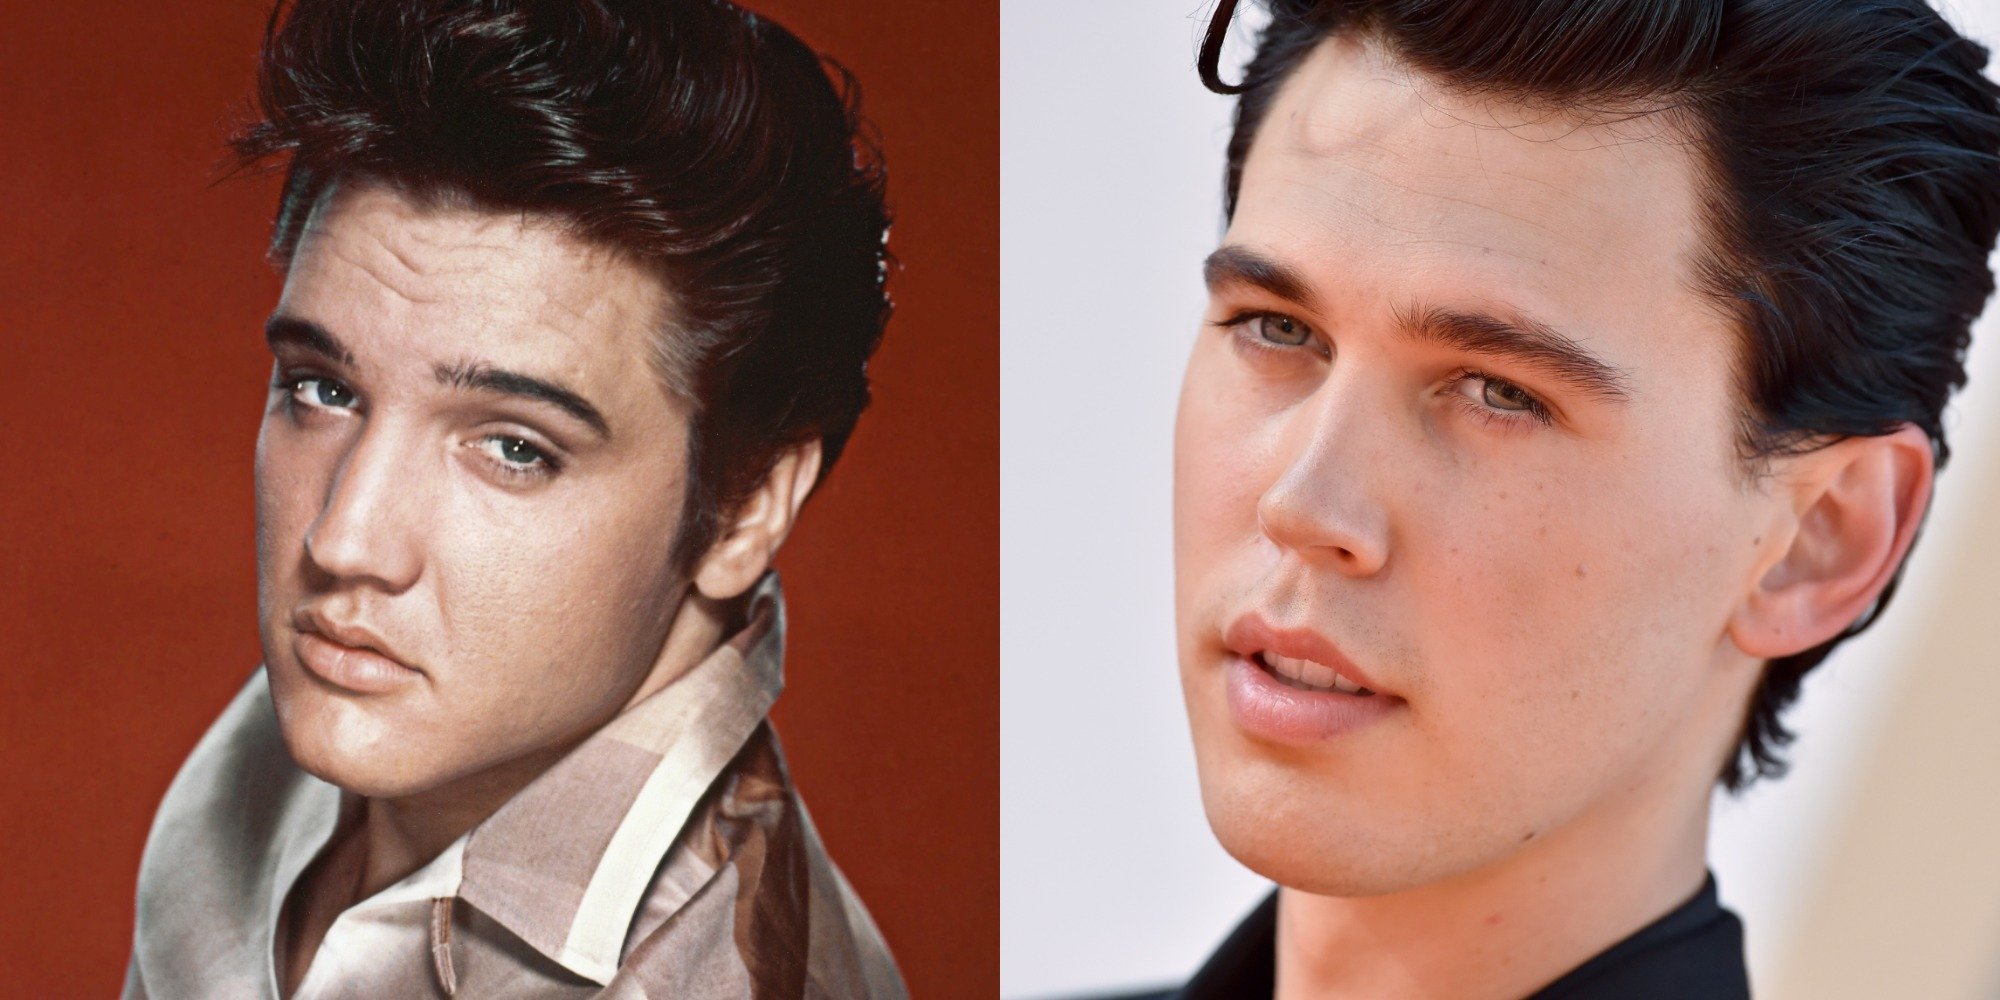 Elvis Presley and Austin Butler in side by side photographs.